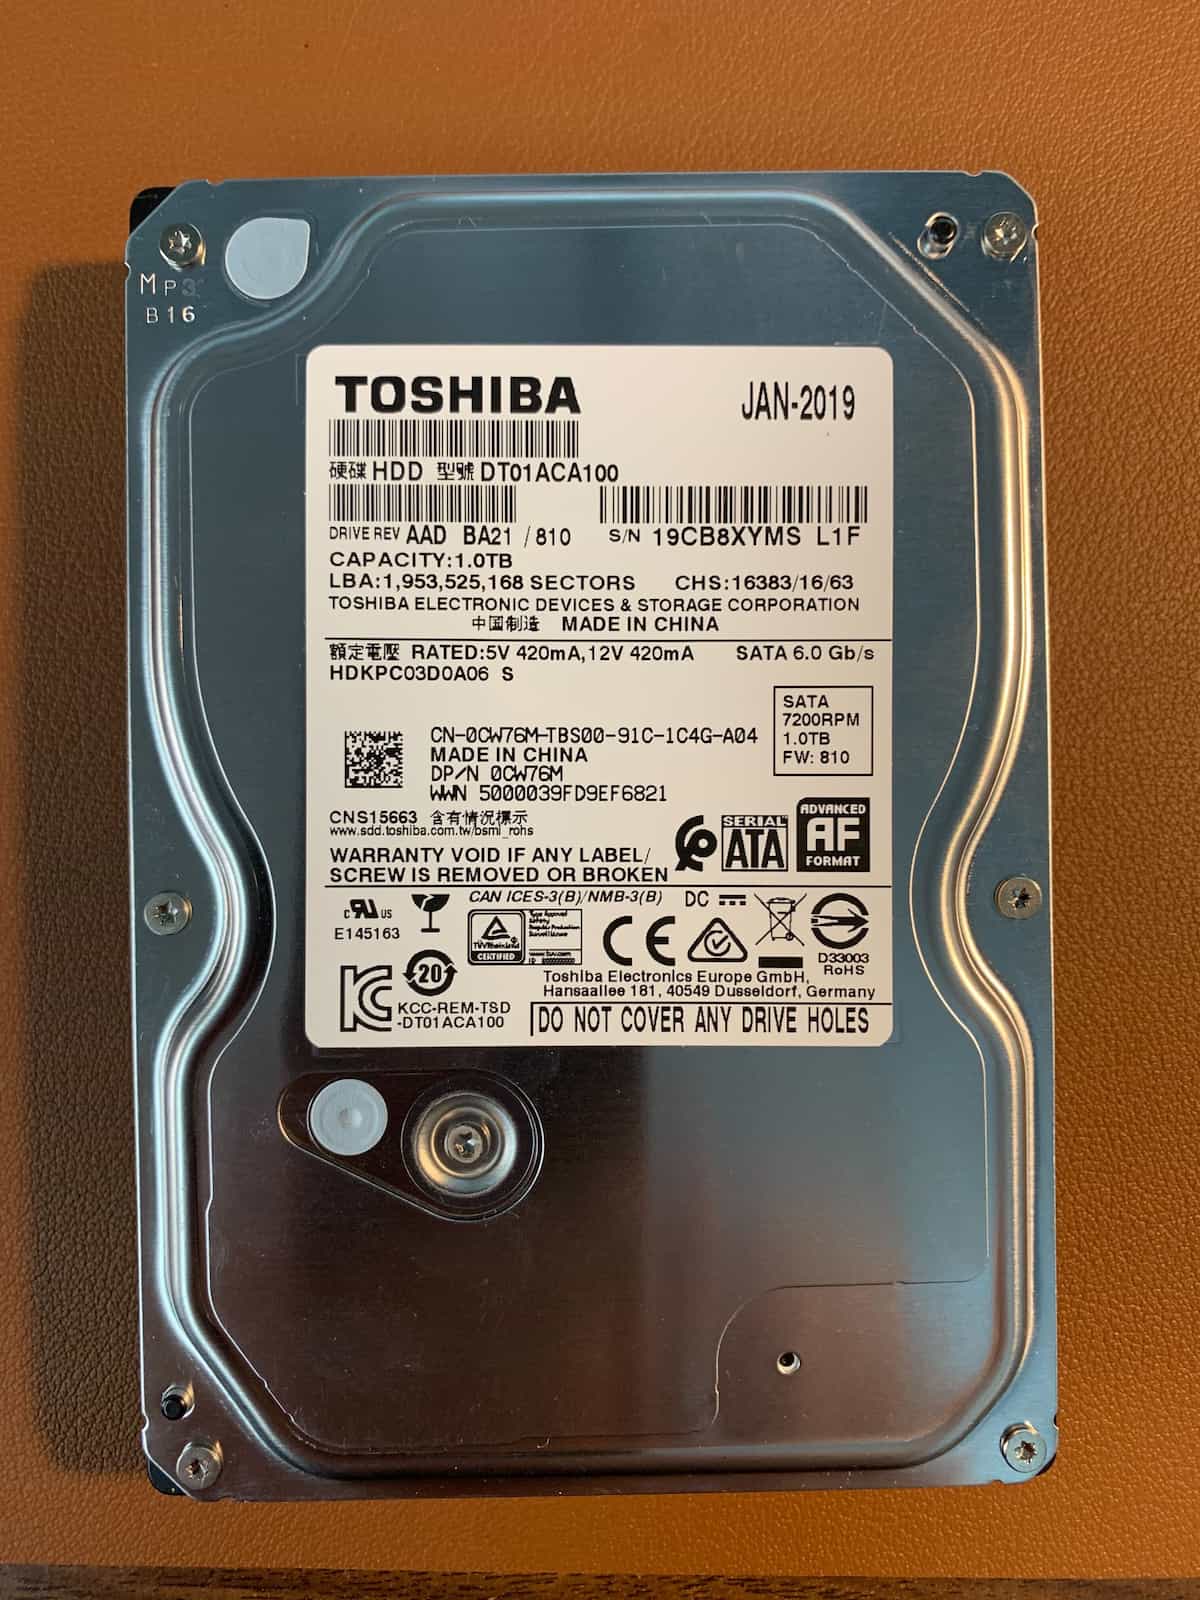 Completely dead Toshiba drive 3.5 desktop drive